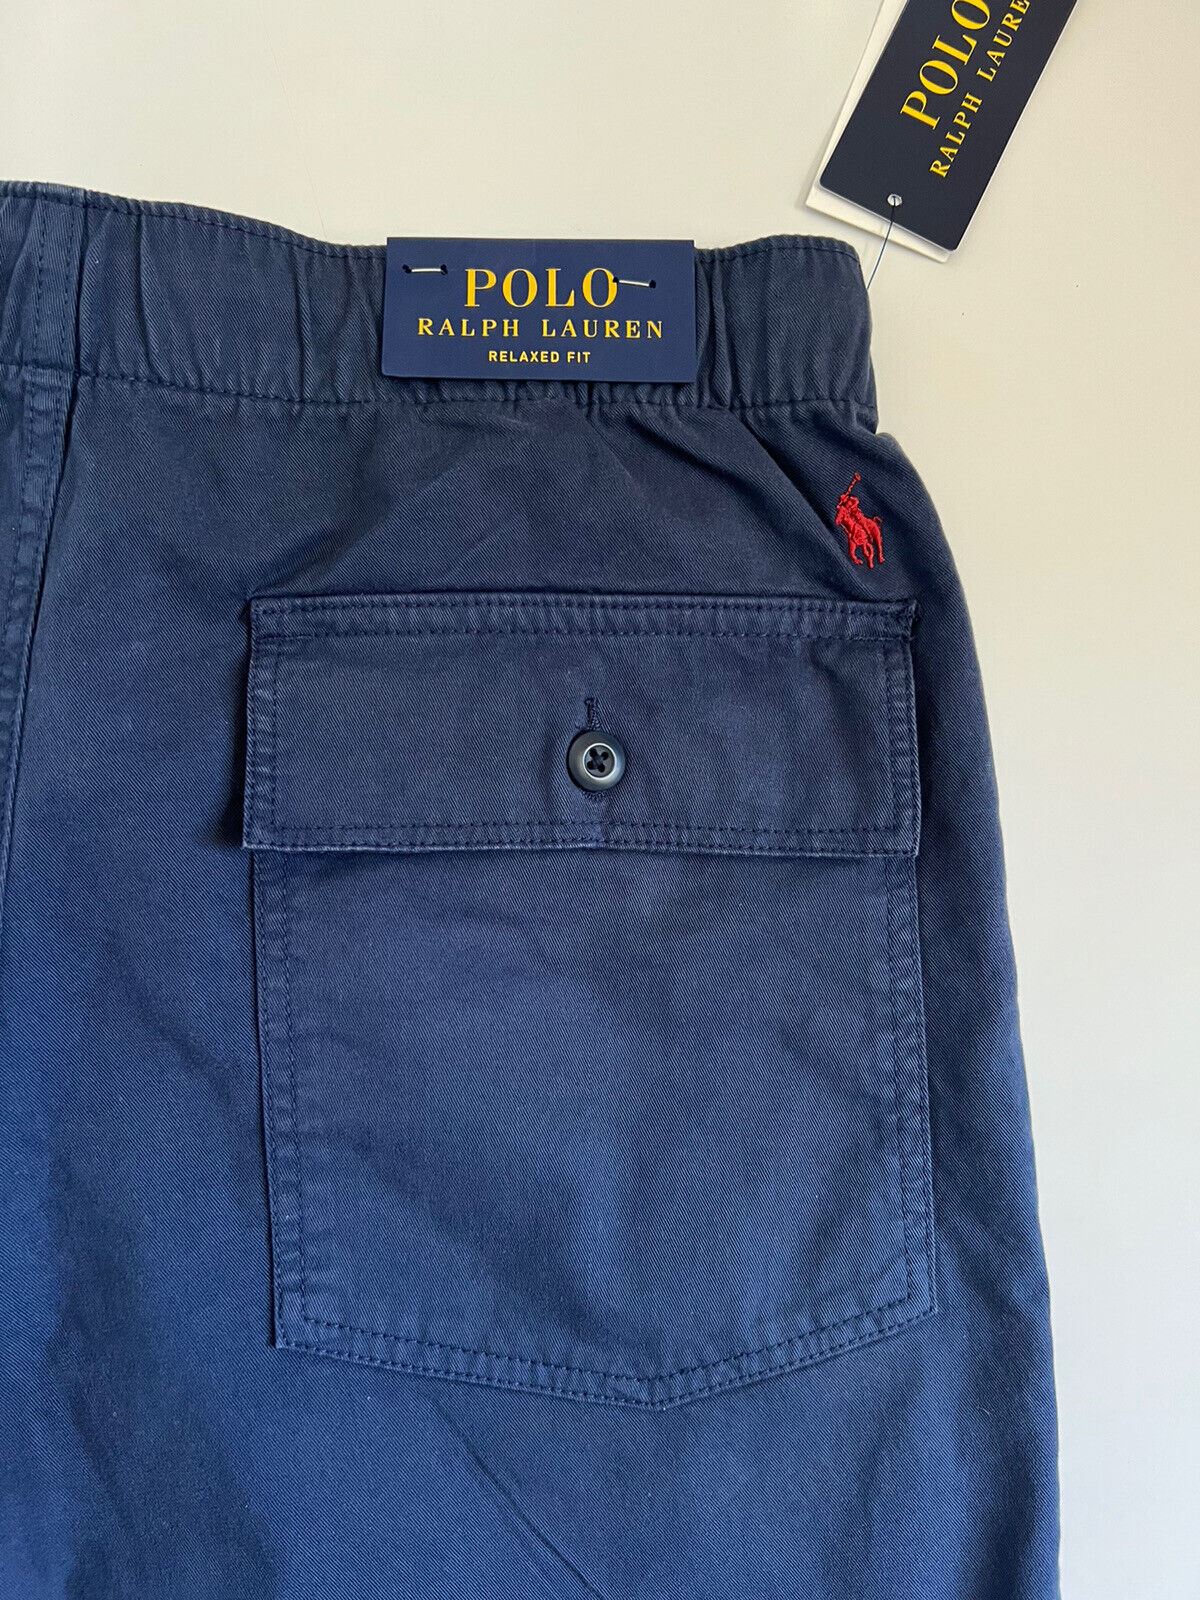 NWT $125 Polo Ralph Lauren Men's Blue Shorts Size Small